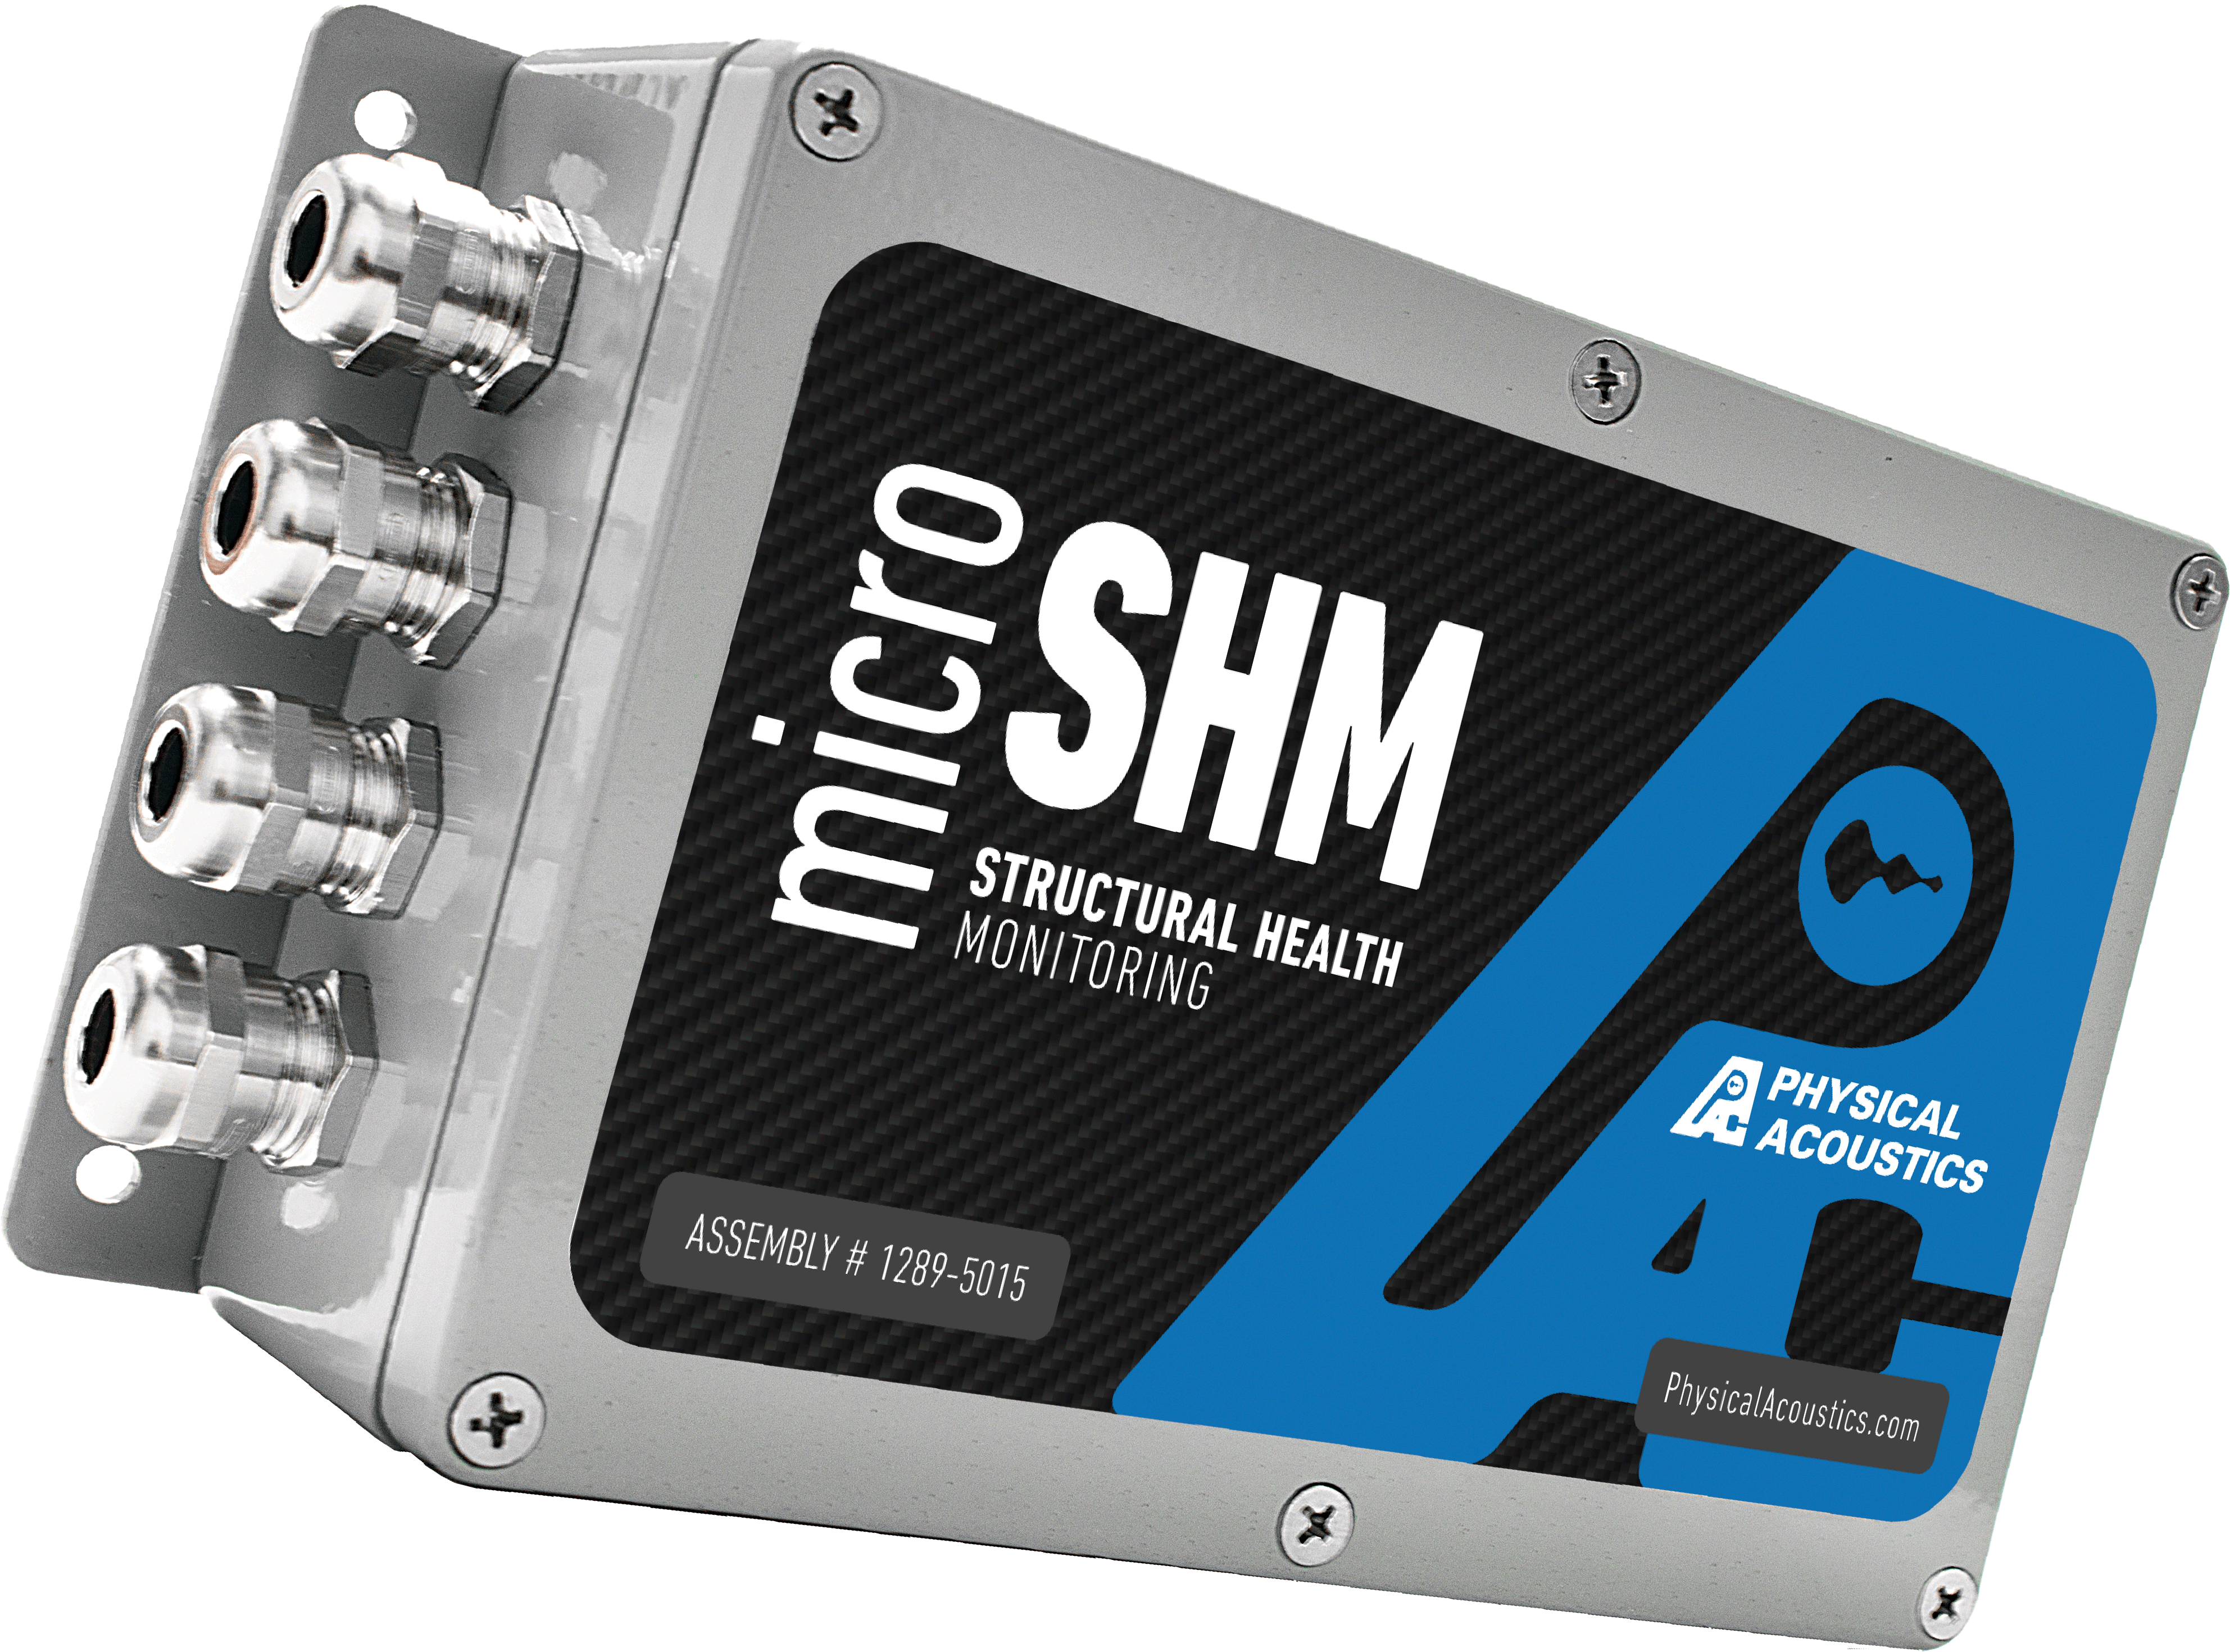 Micro-SHM Monitoring System